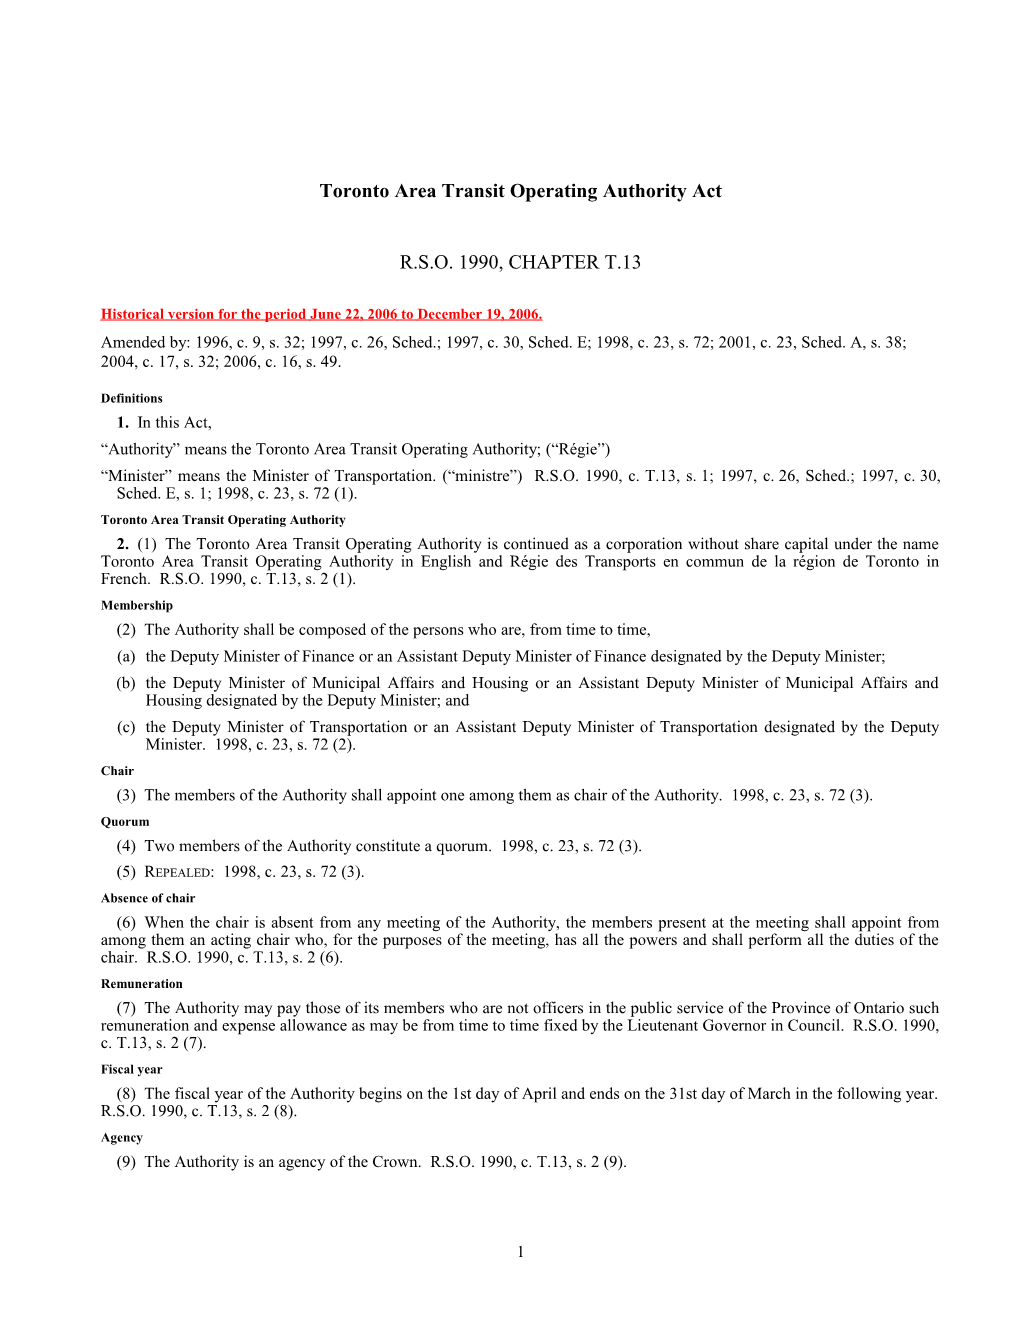 Toronto Area Transit Operating Authority Act, R.S.O. 1990, C. T.13